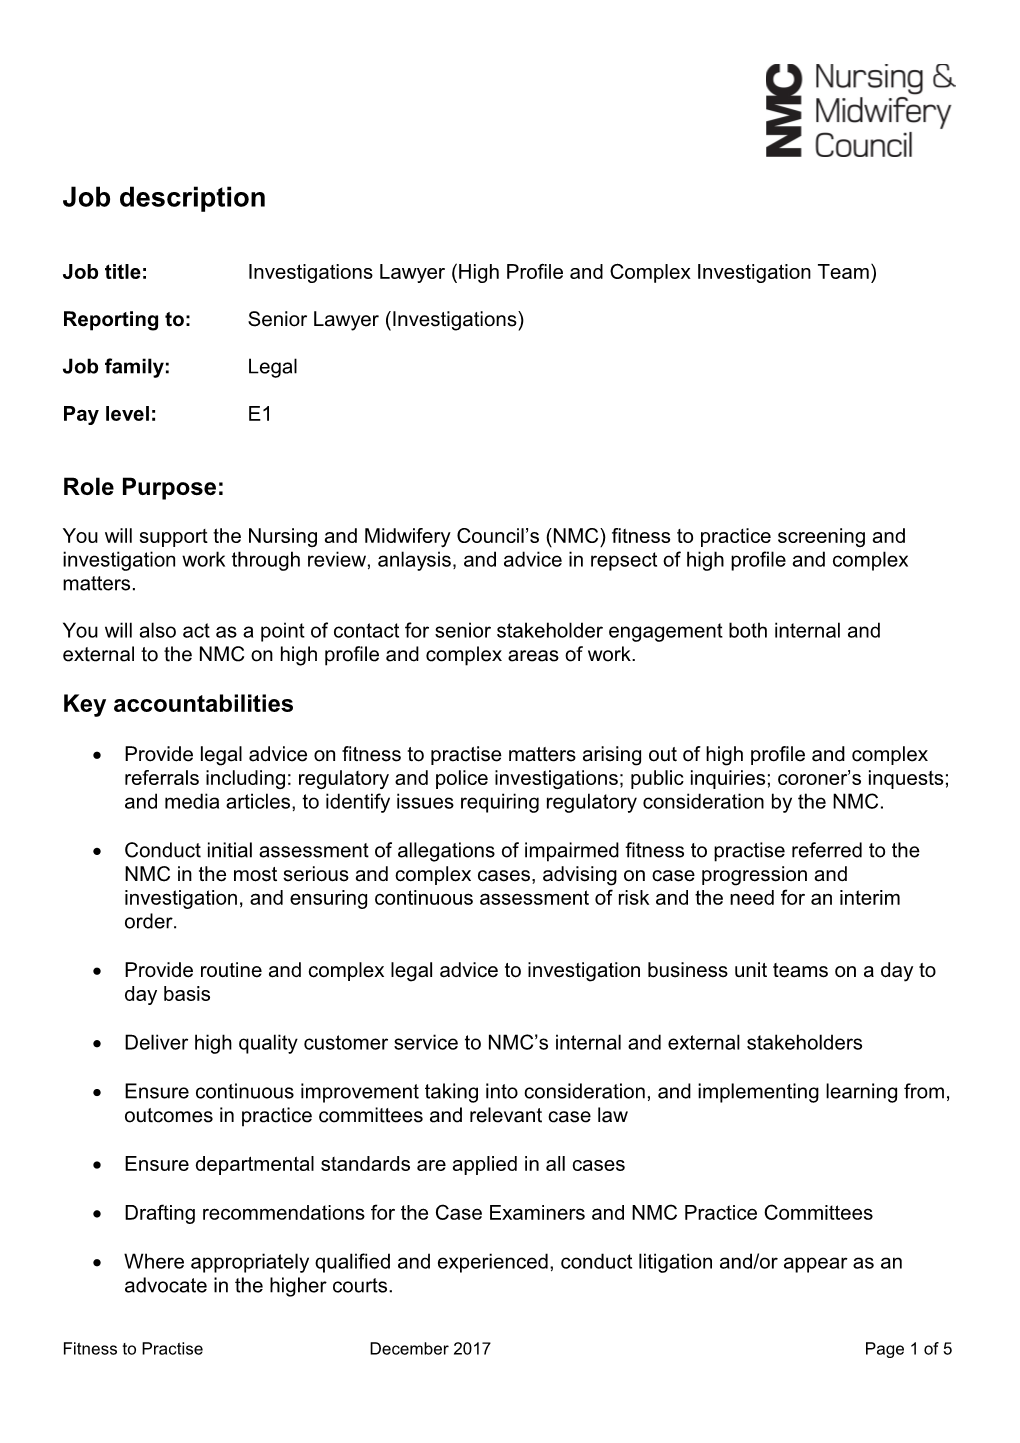 Job Title:Investigationslawyer (High Profile and Complex Investigation Team)